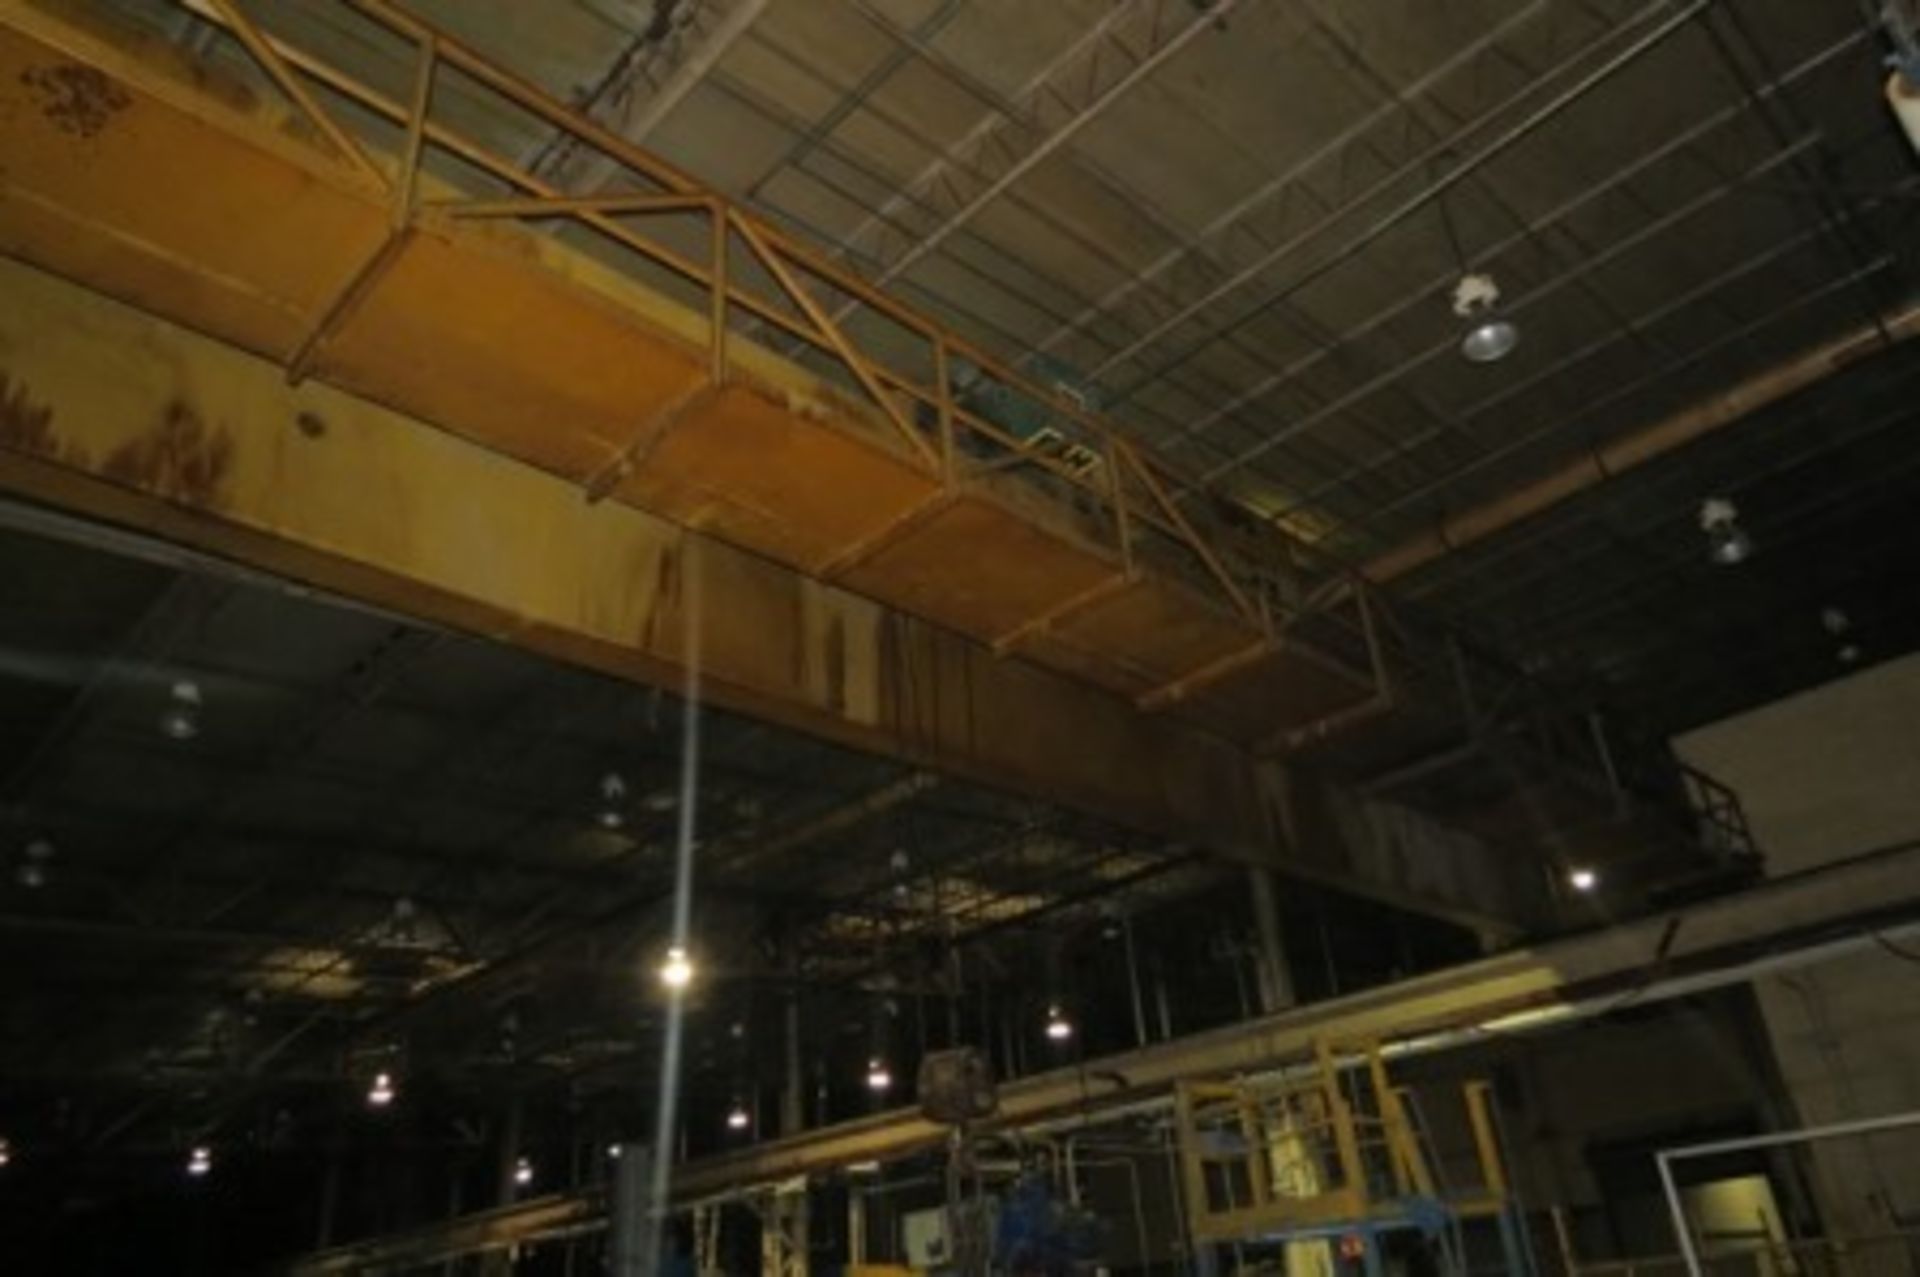 Crane & Hoist G 0037 overhead bridge crane, two 20 ton P&H hoists, 24 m span, 144 m rails runway - Image 16 of 27